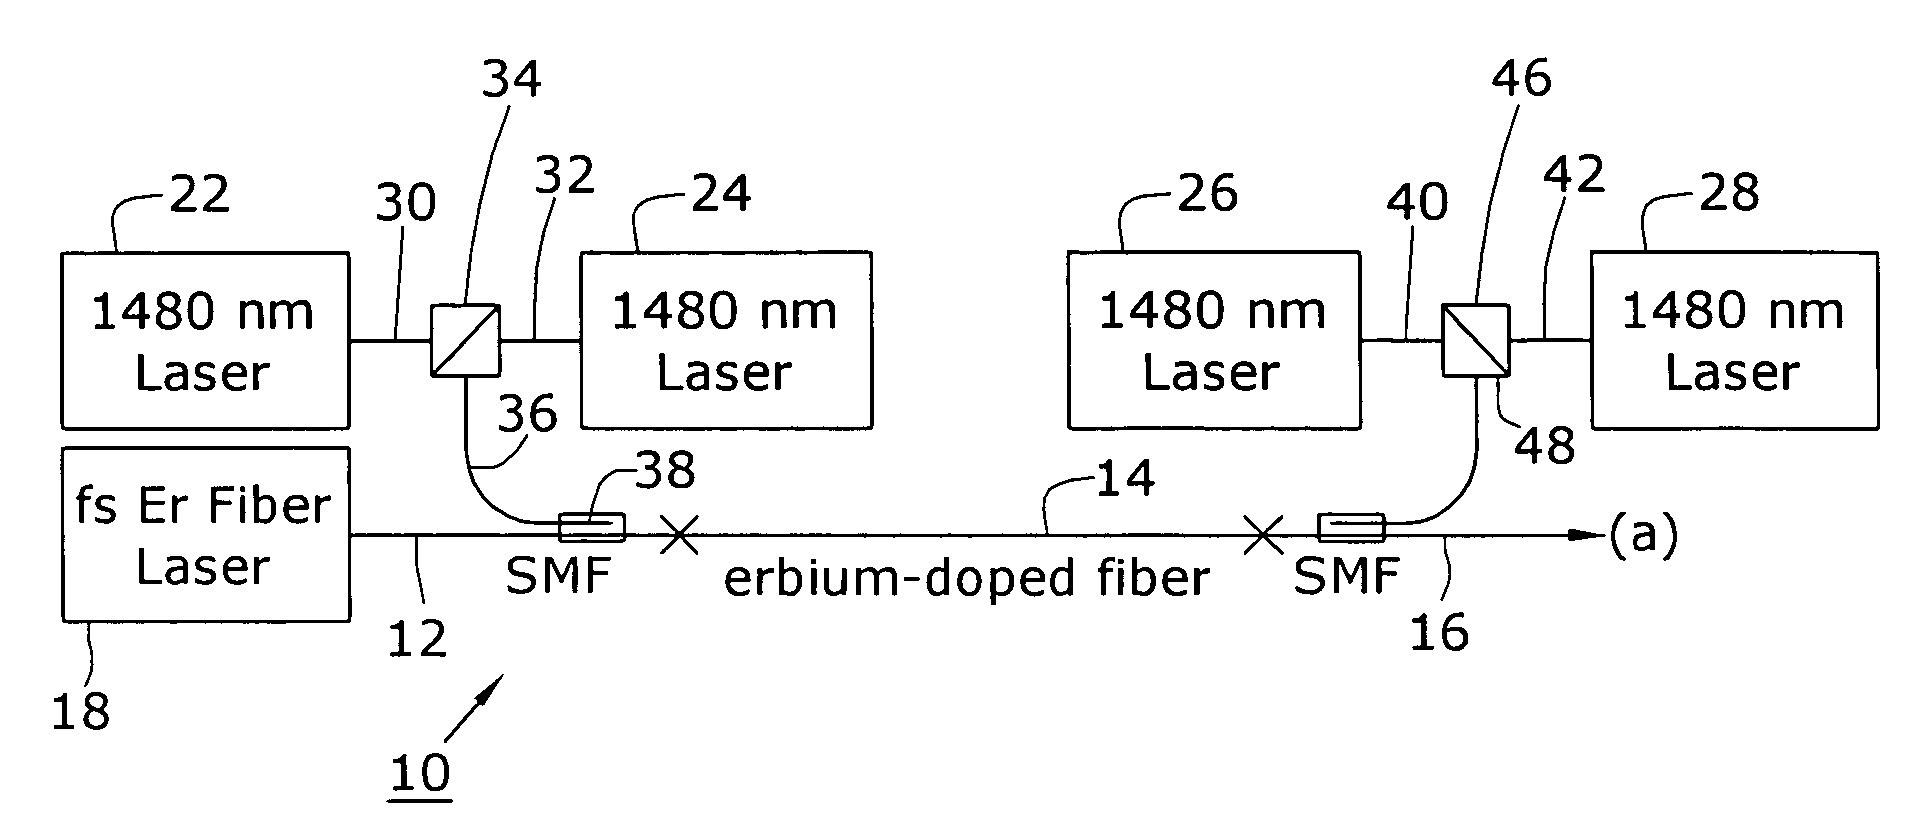 Fiber amplifier for generating femtosecond pulses in single mode fiber